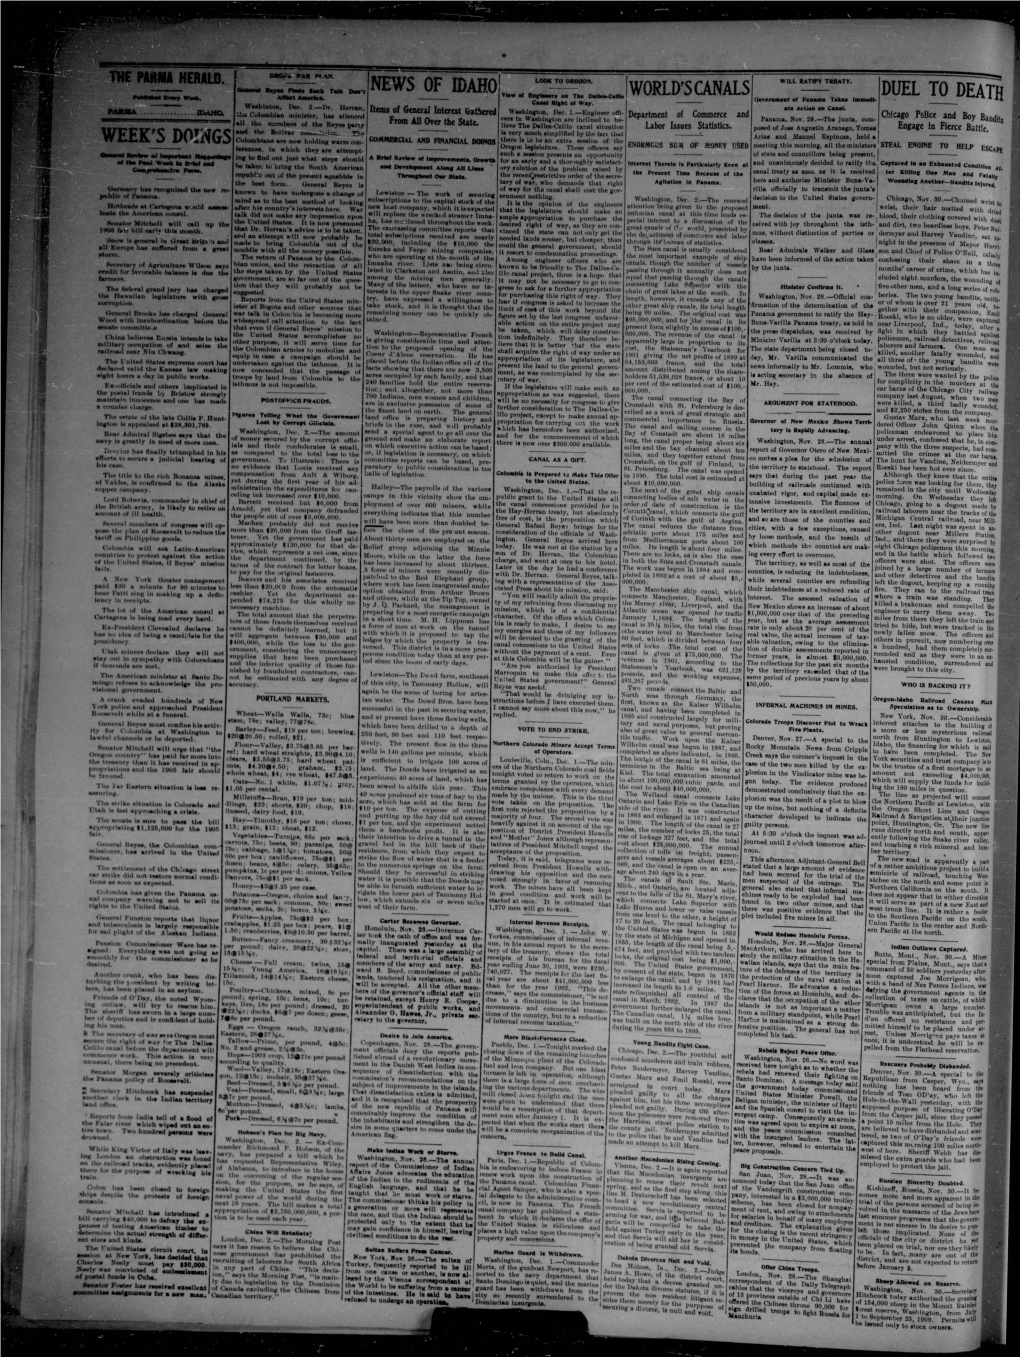 The Parma Herald (Parma, Idaho), 1903-12-05, [P ]